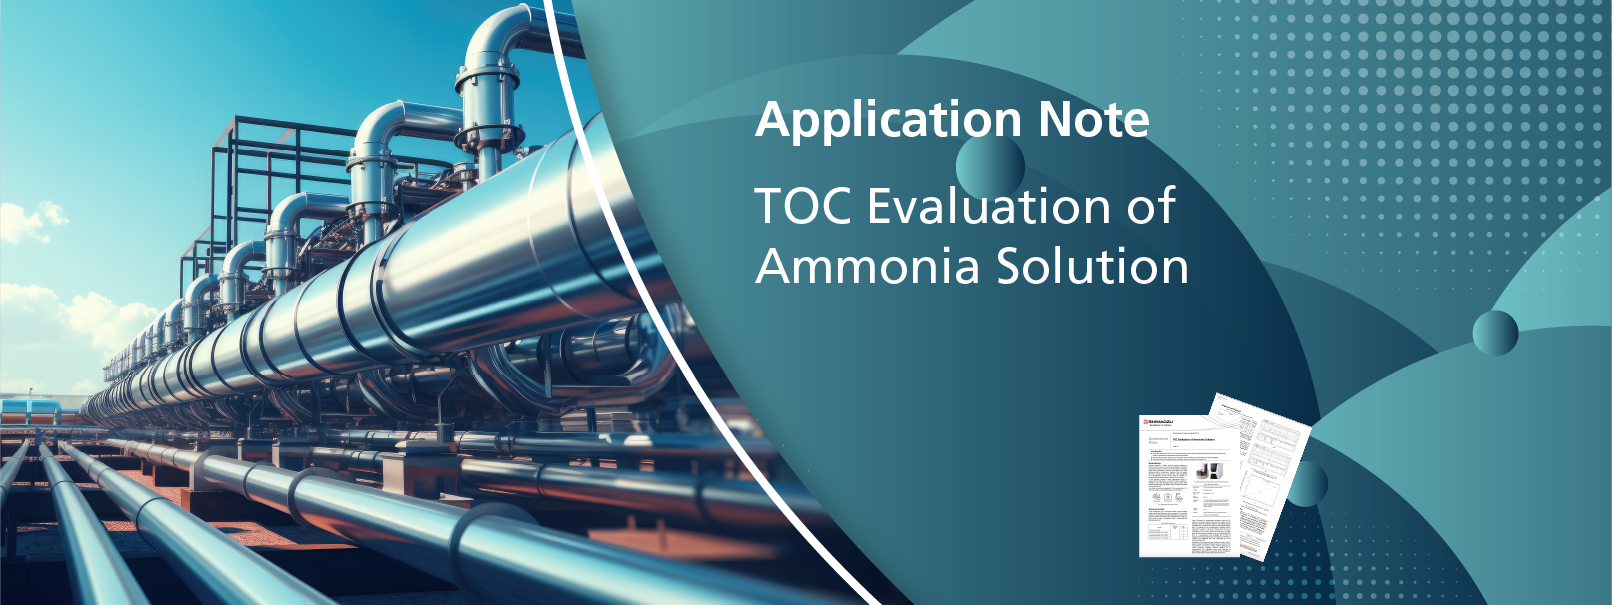 TOC Evaluation of Ammonia Solution